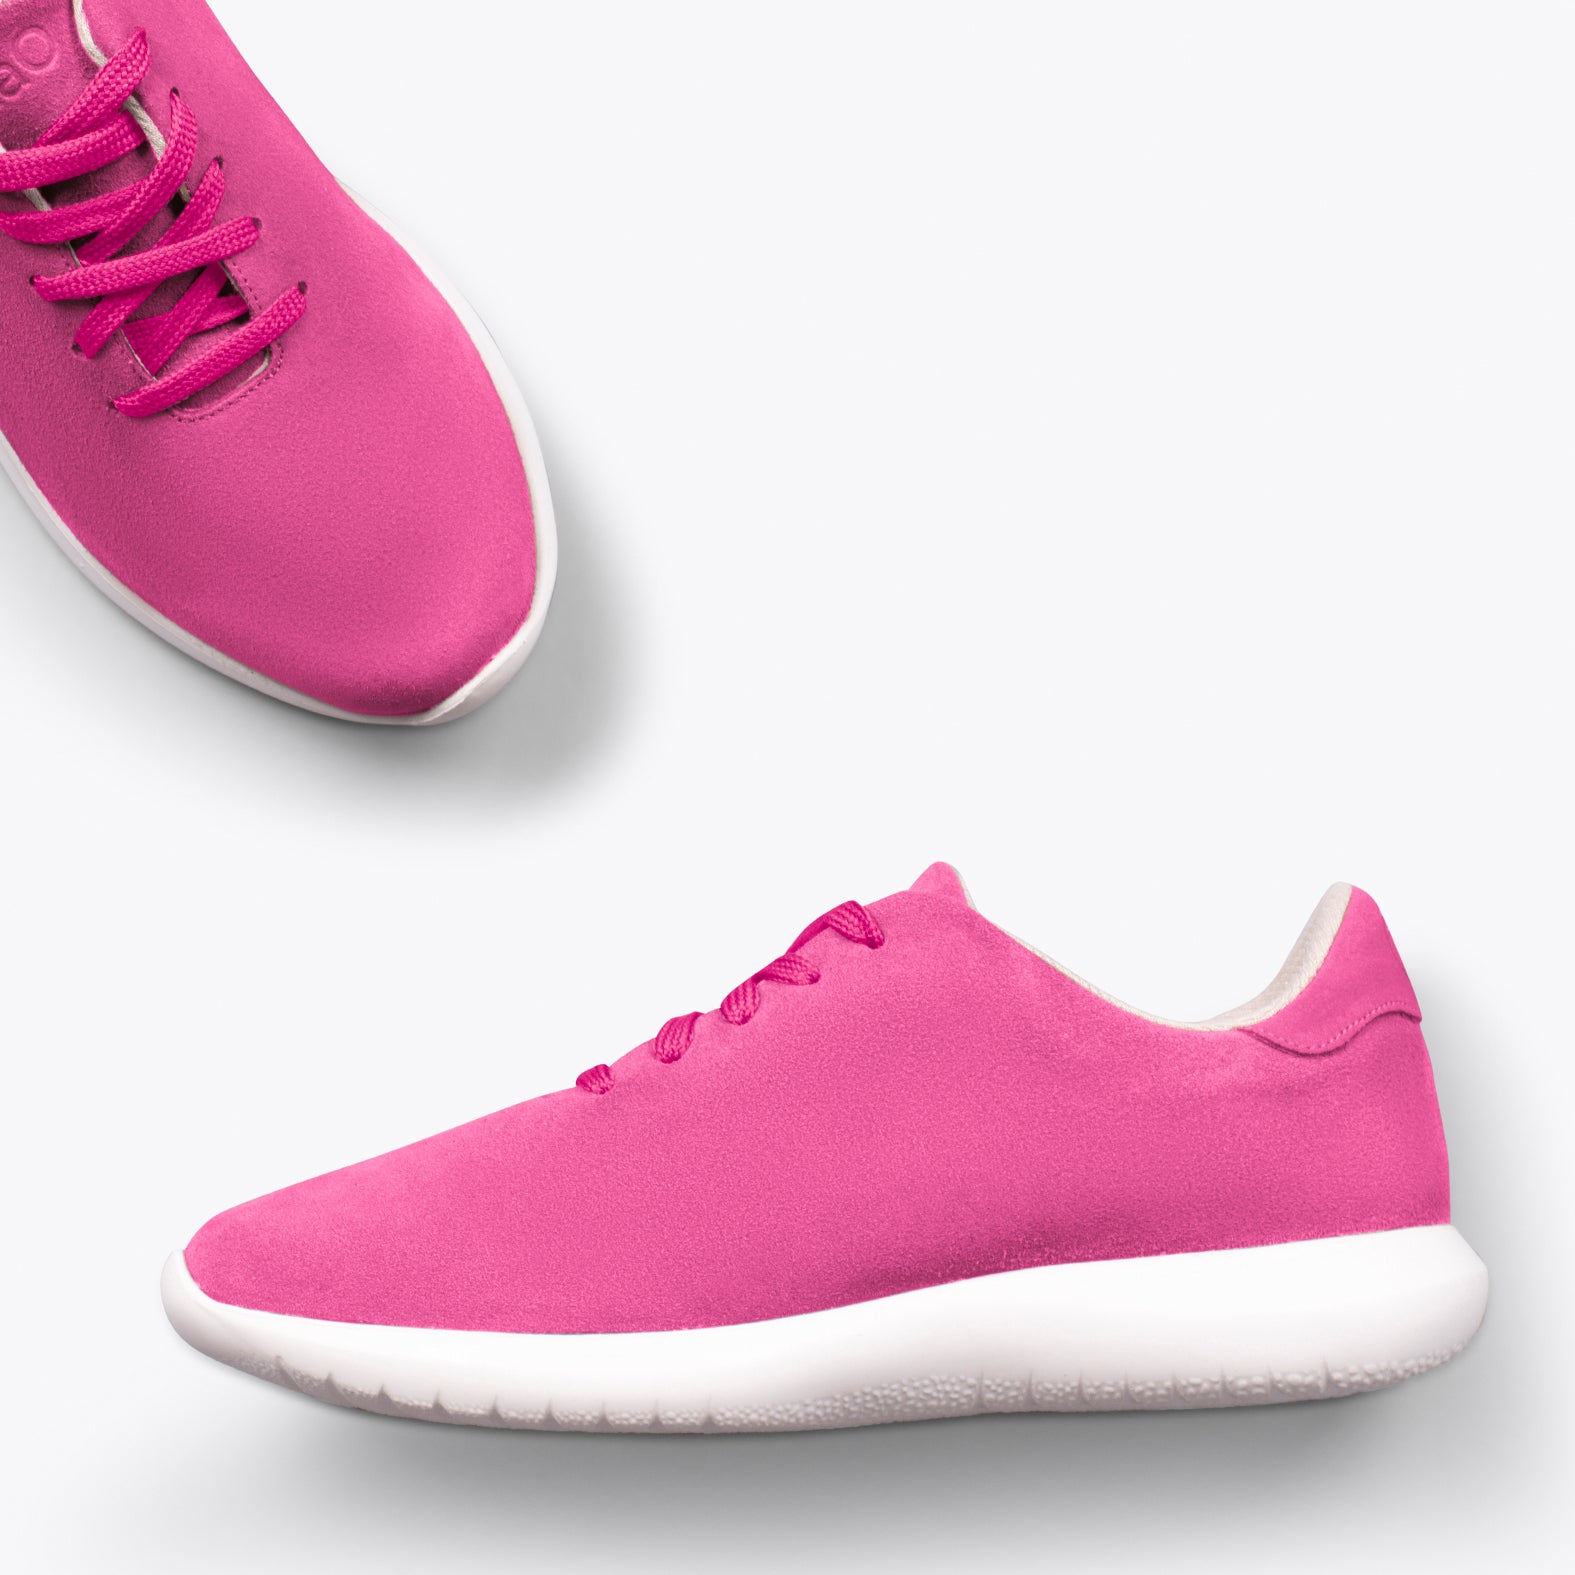 WALK – FUCHSIA comfortable women’s sneakers